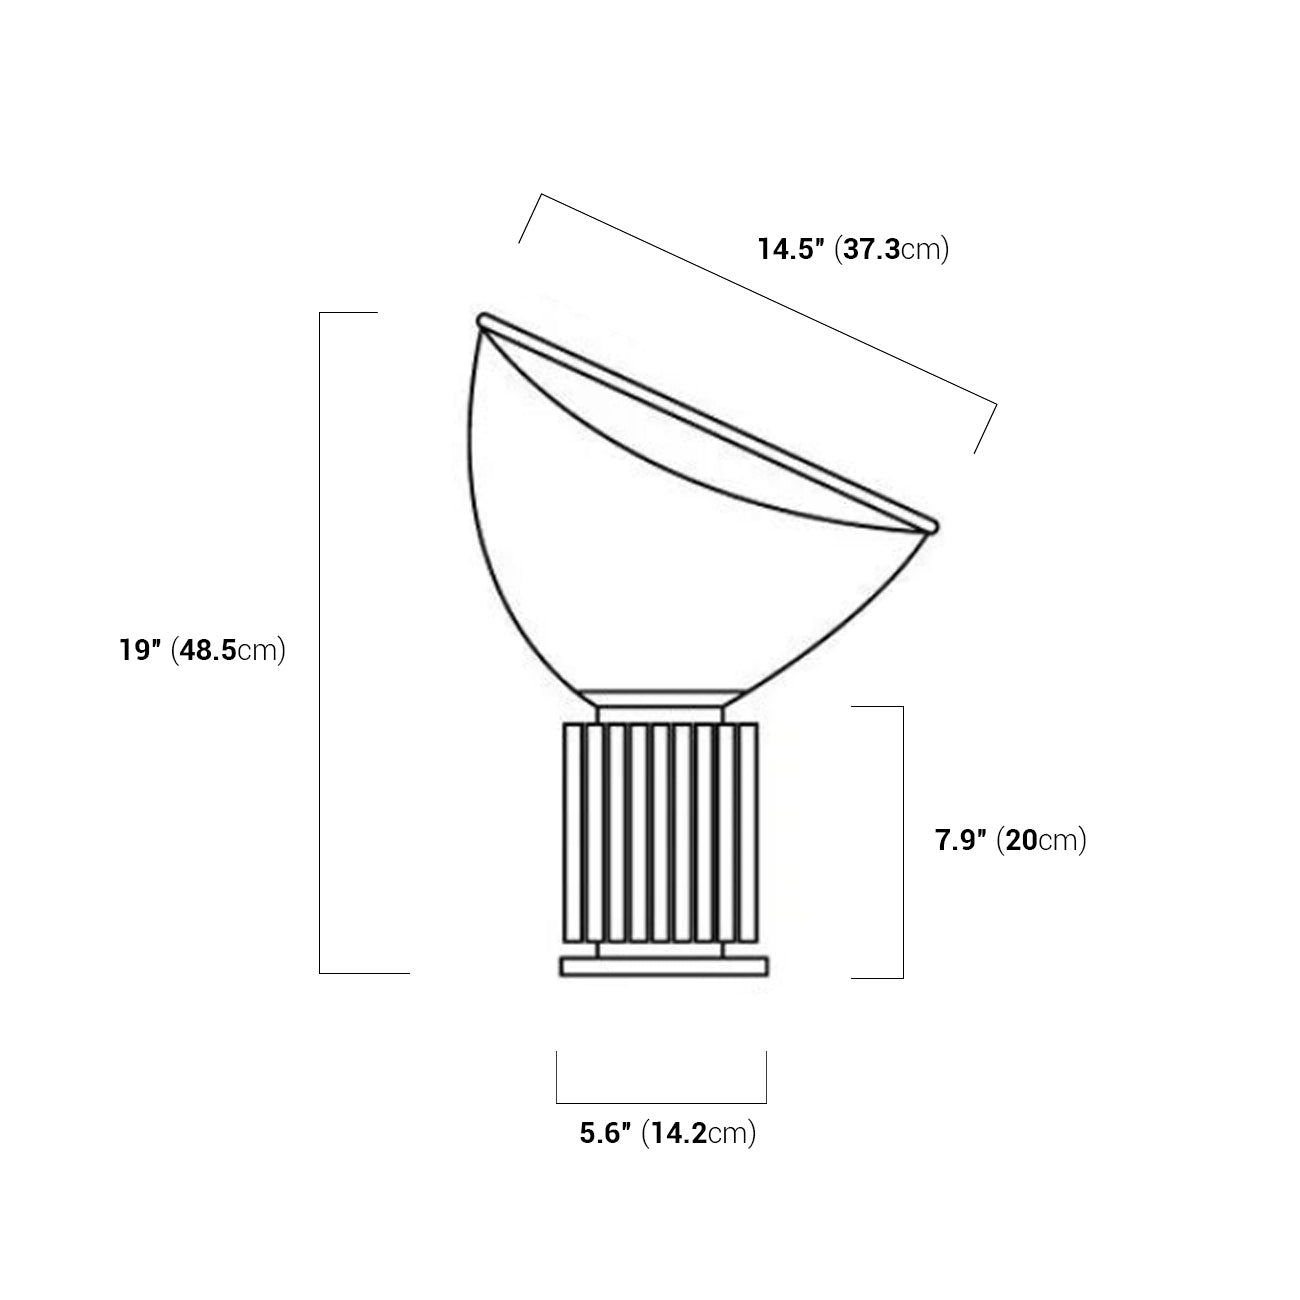 Italian Style Transparent Bowl Chrome Lamp